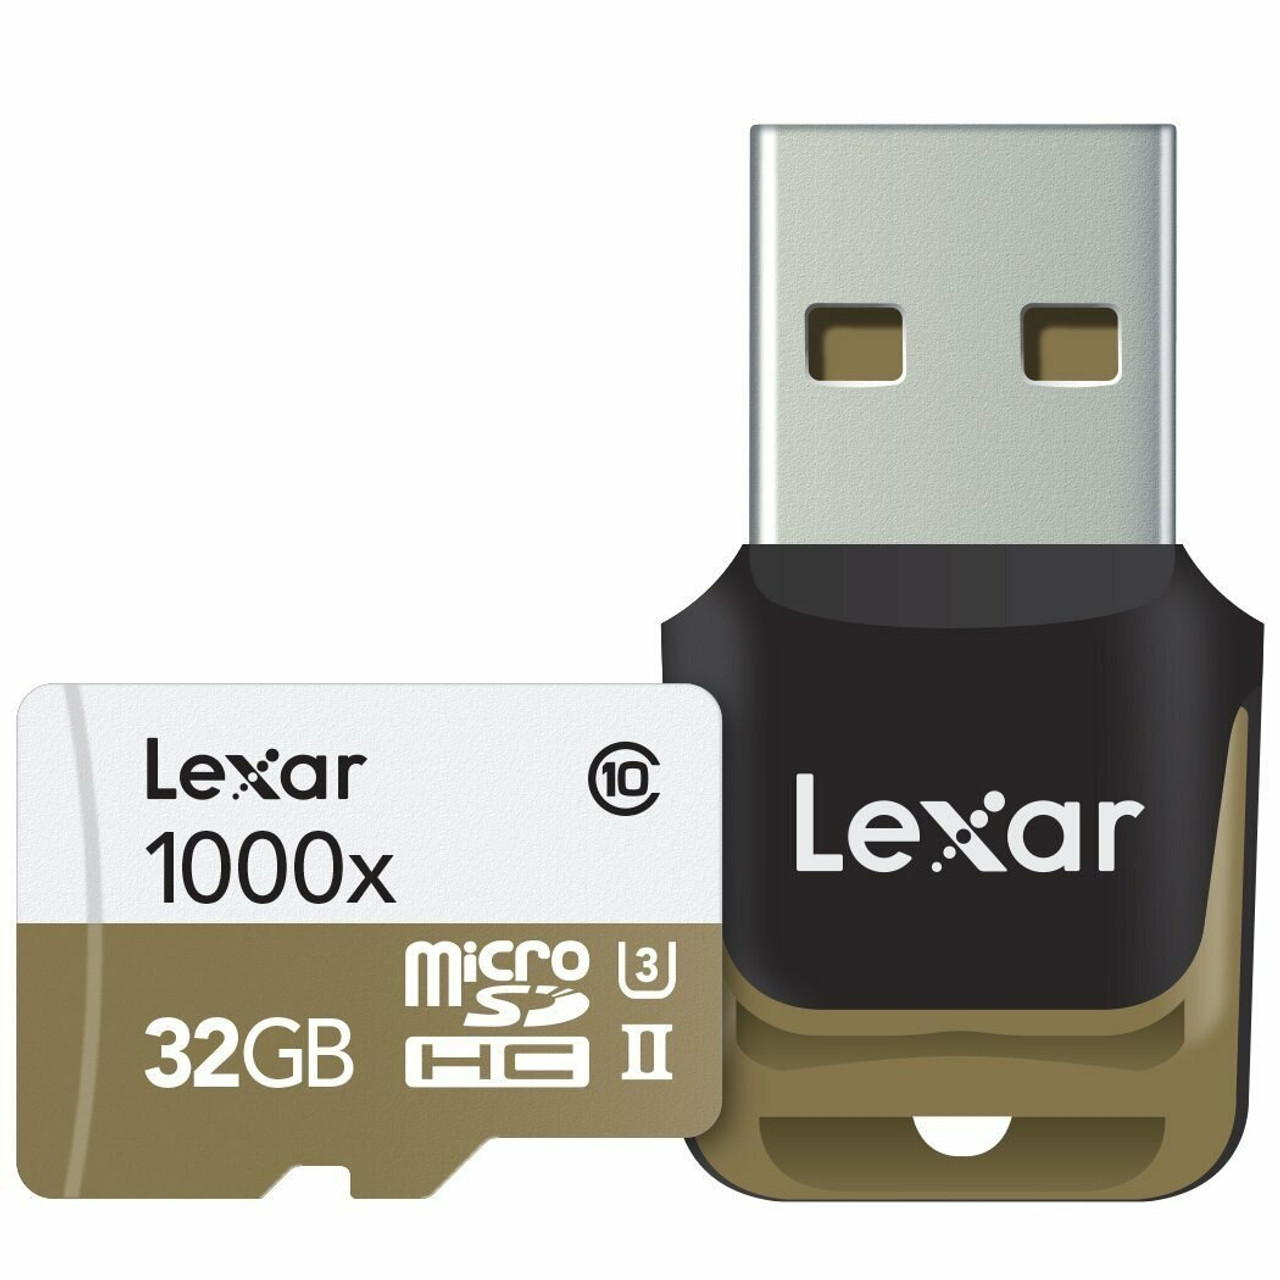 Lexar introduces 600x 64GB microSDXC UHS-I card, four-way reader